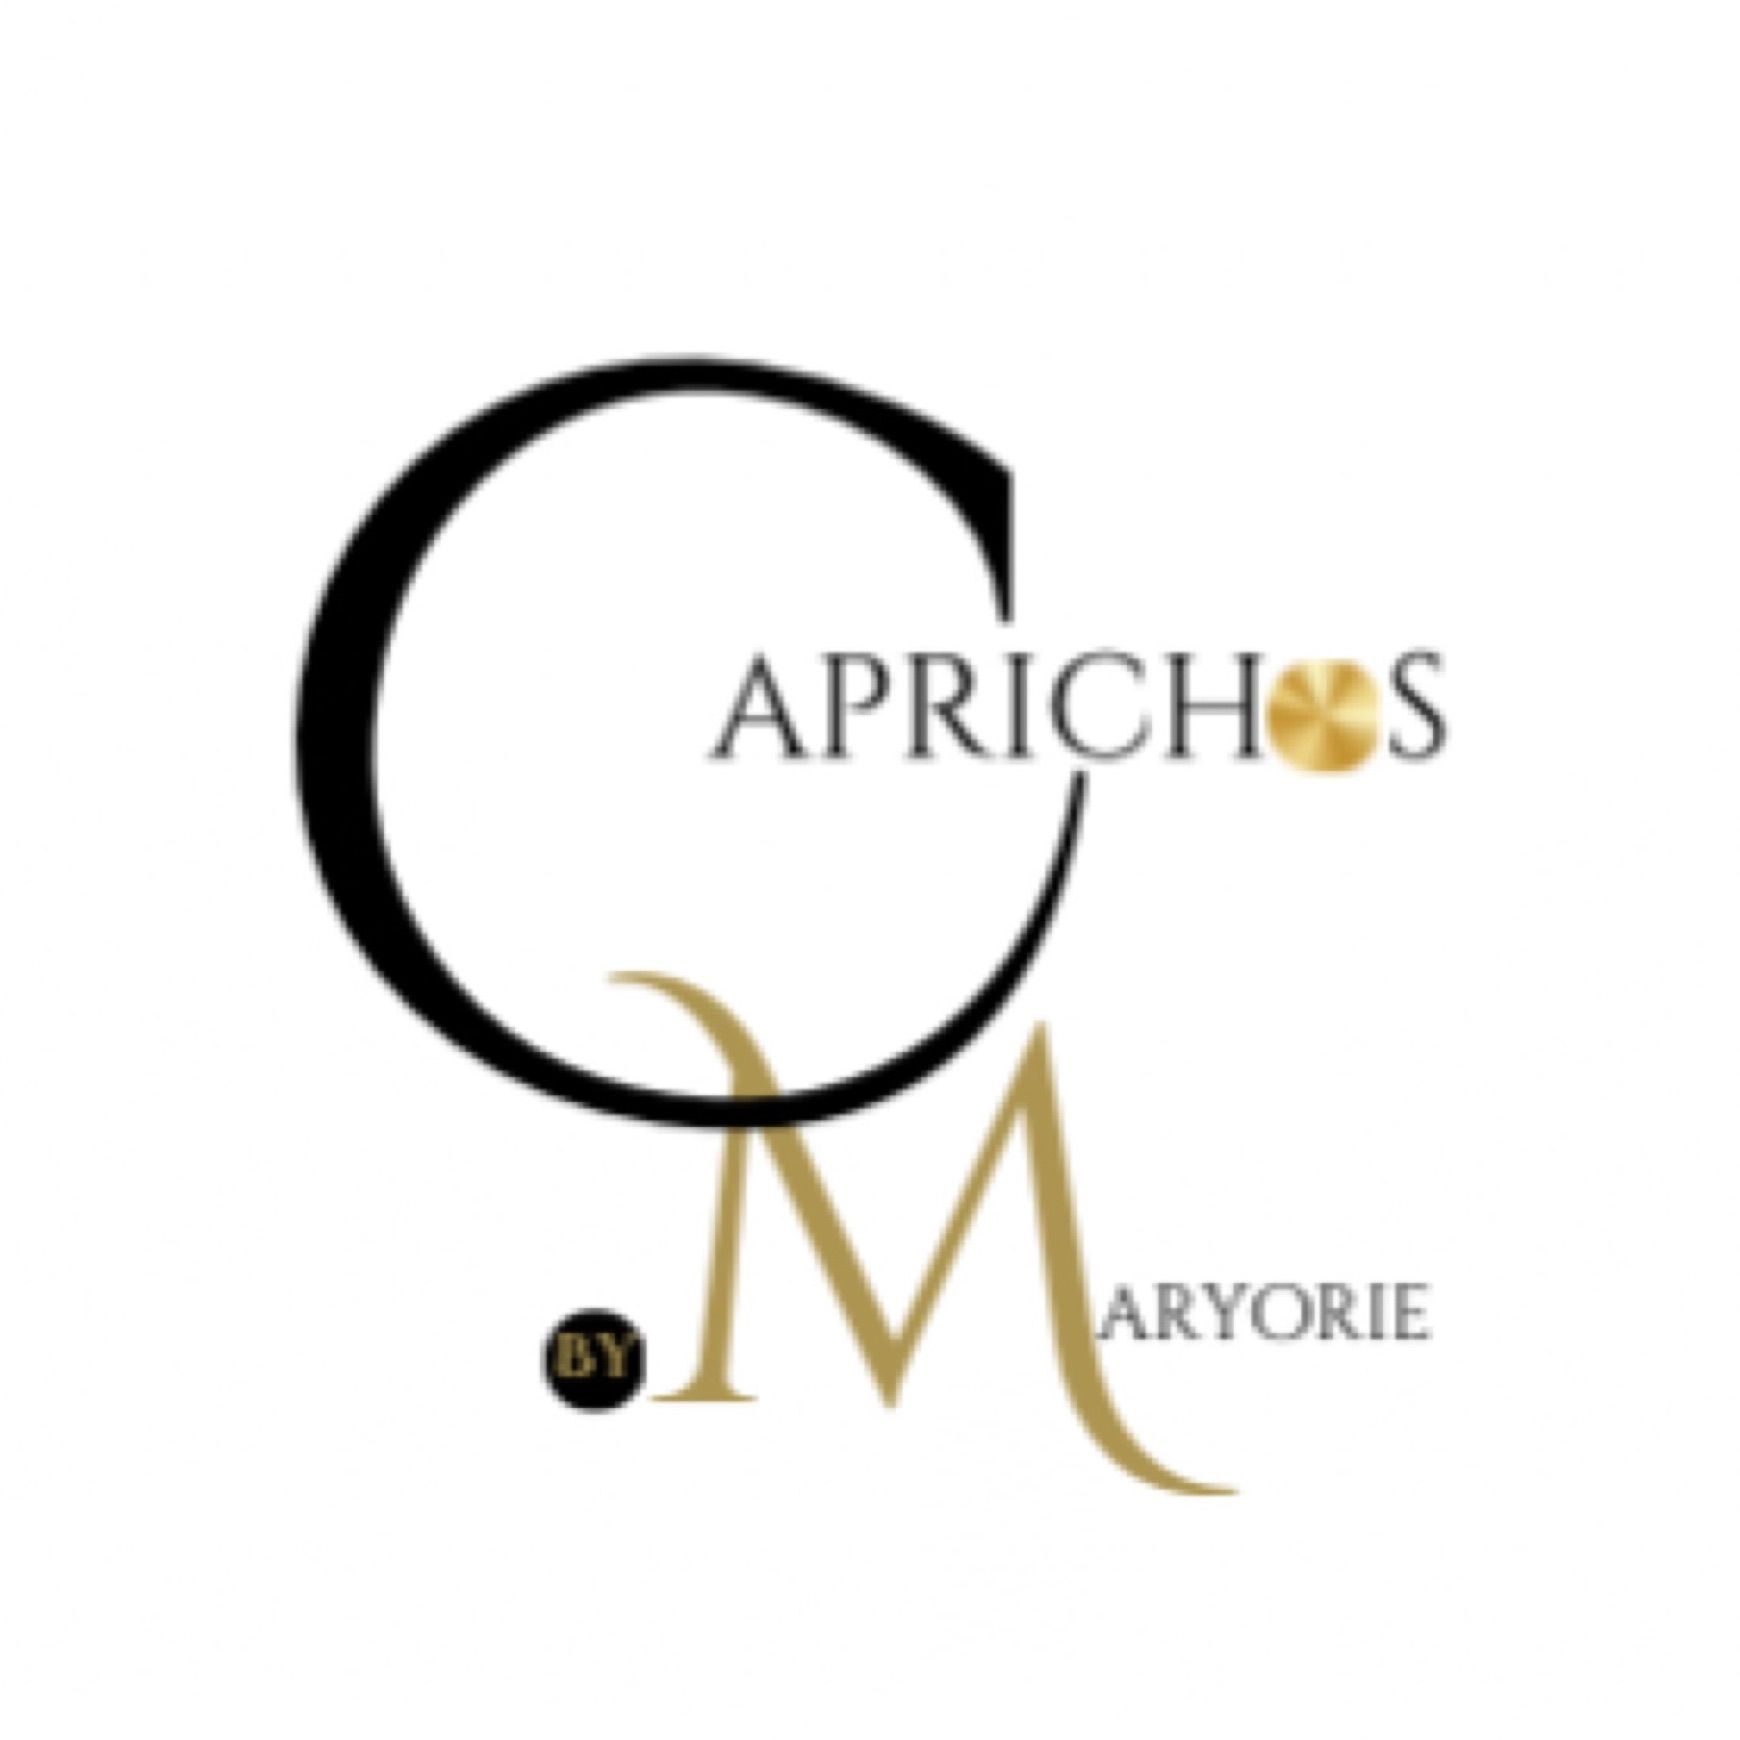 Caprichos by Maryorie, 1055 Avenida Hostos, Ponce, 00716